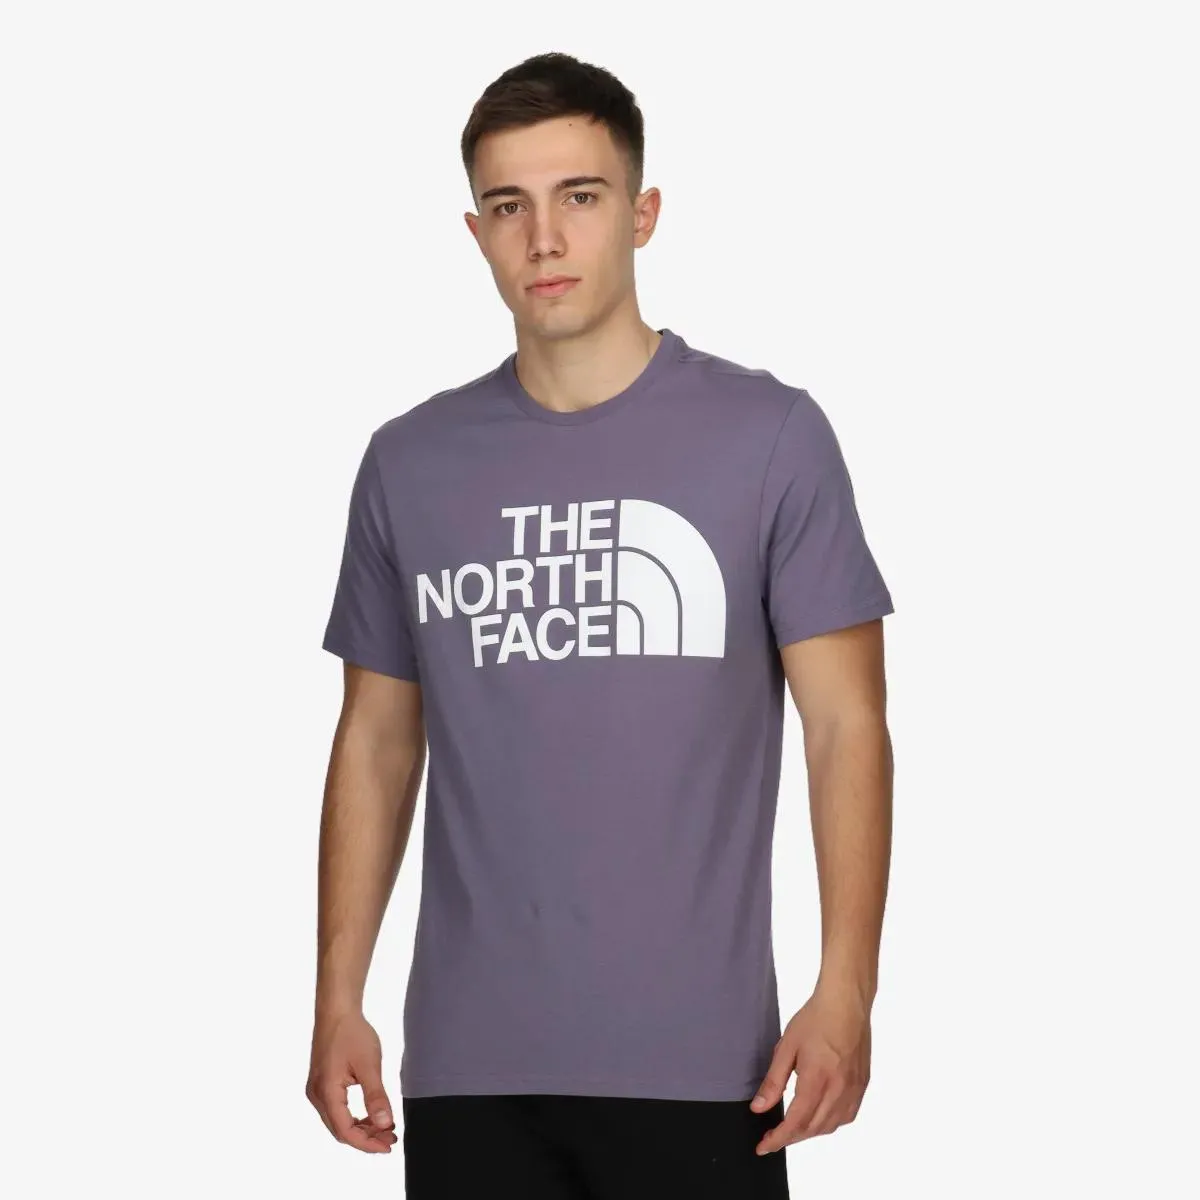 The North Face T-shirt Men’s Standard Ss Tee 